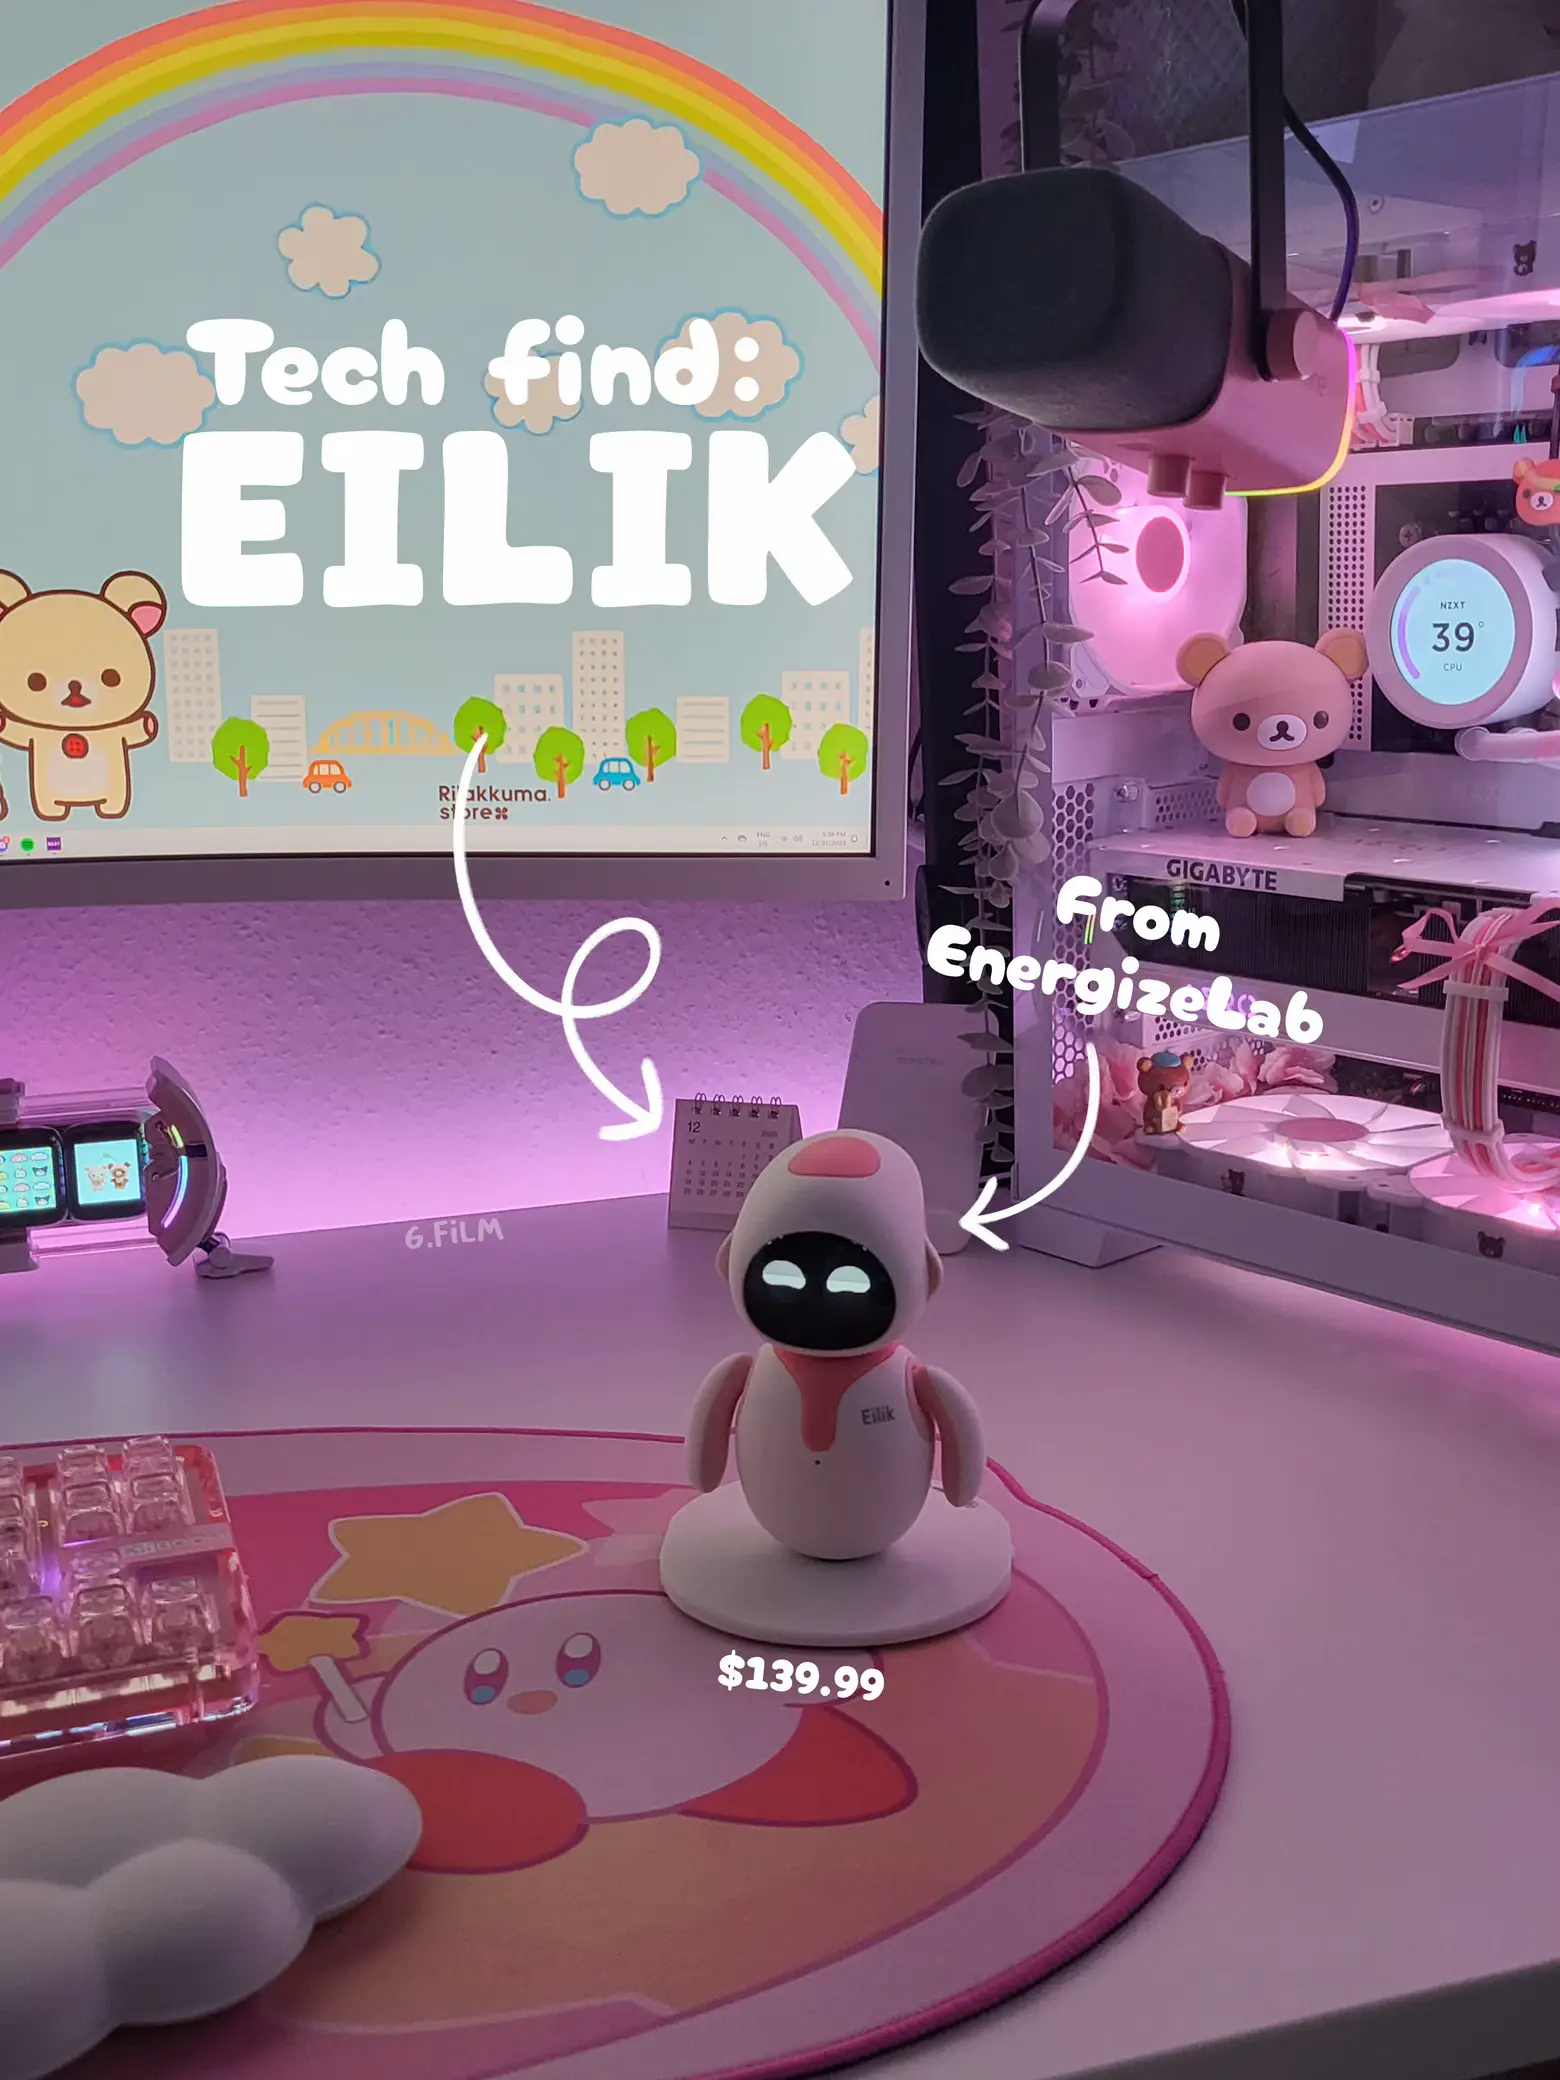 elik robot how much｜TikTok Search